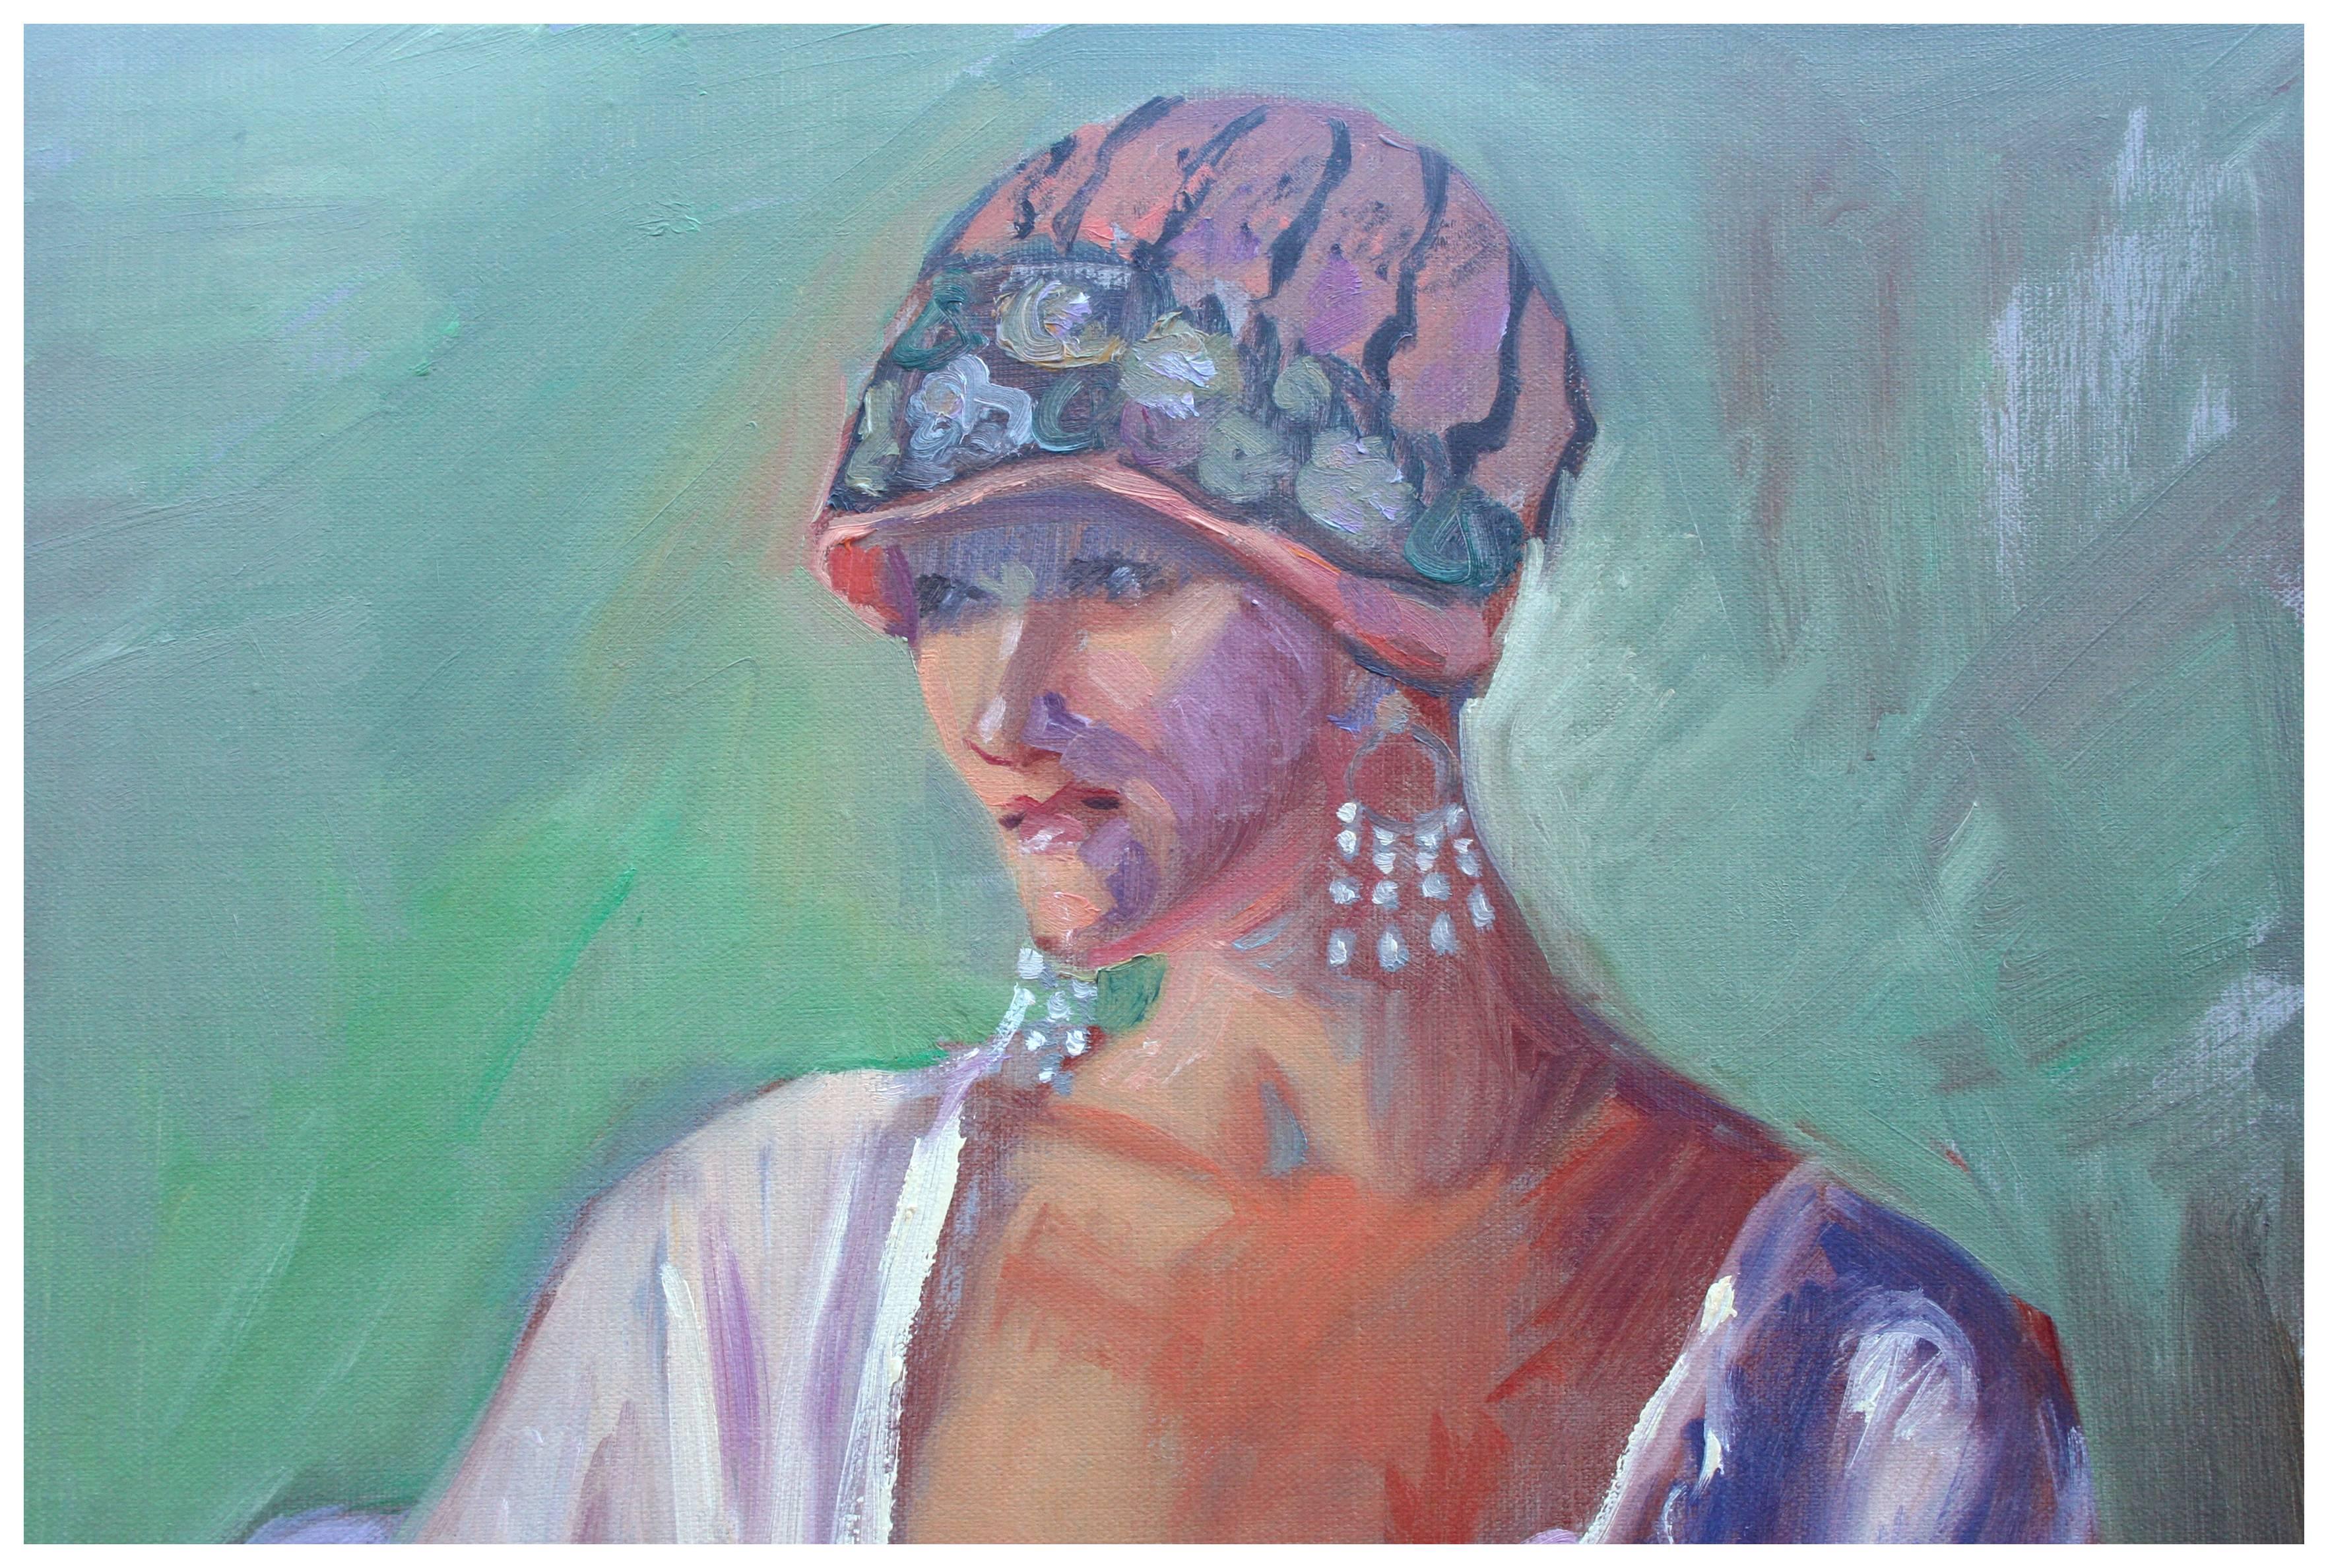 Retrato de mujer de púrpura - Figurativa femenina parisina Art Decó - Painting de Dominique Amendola 